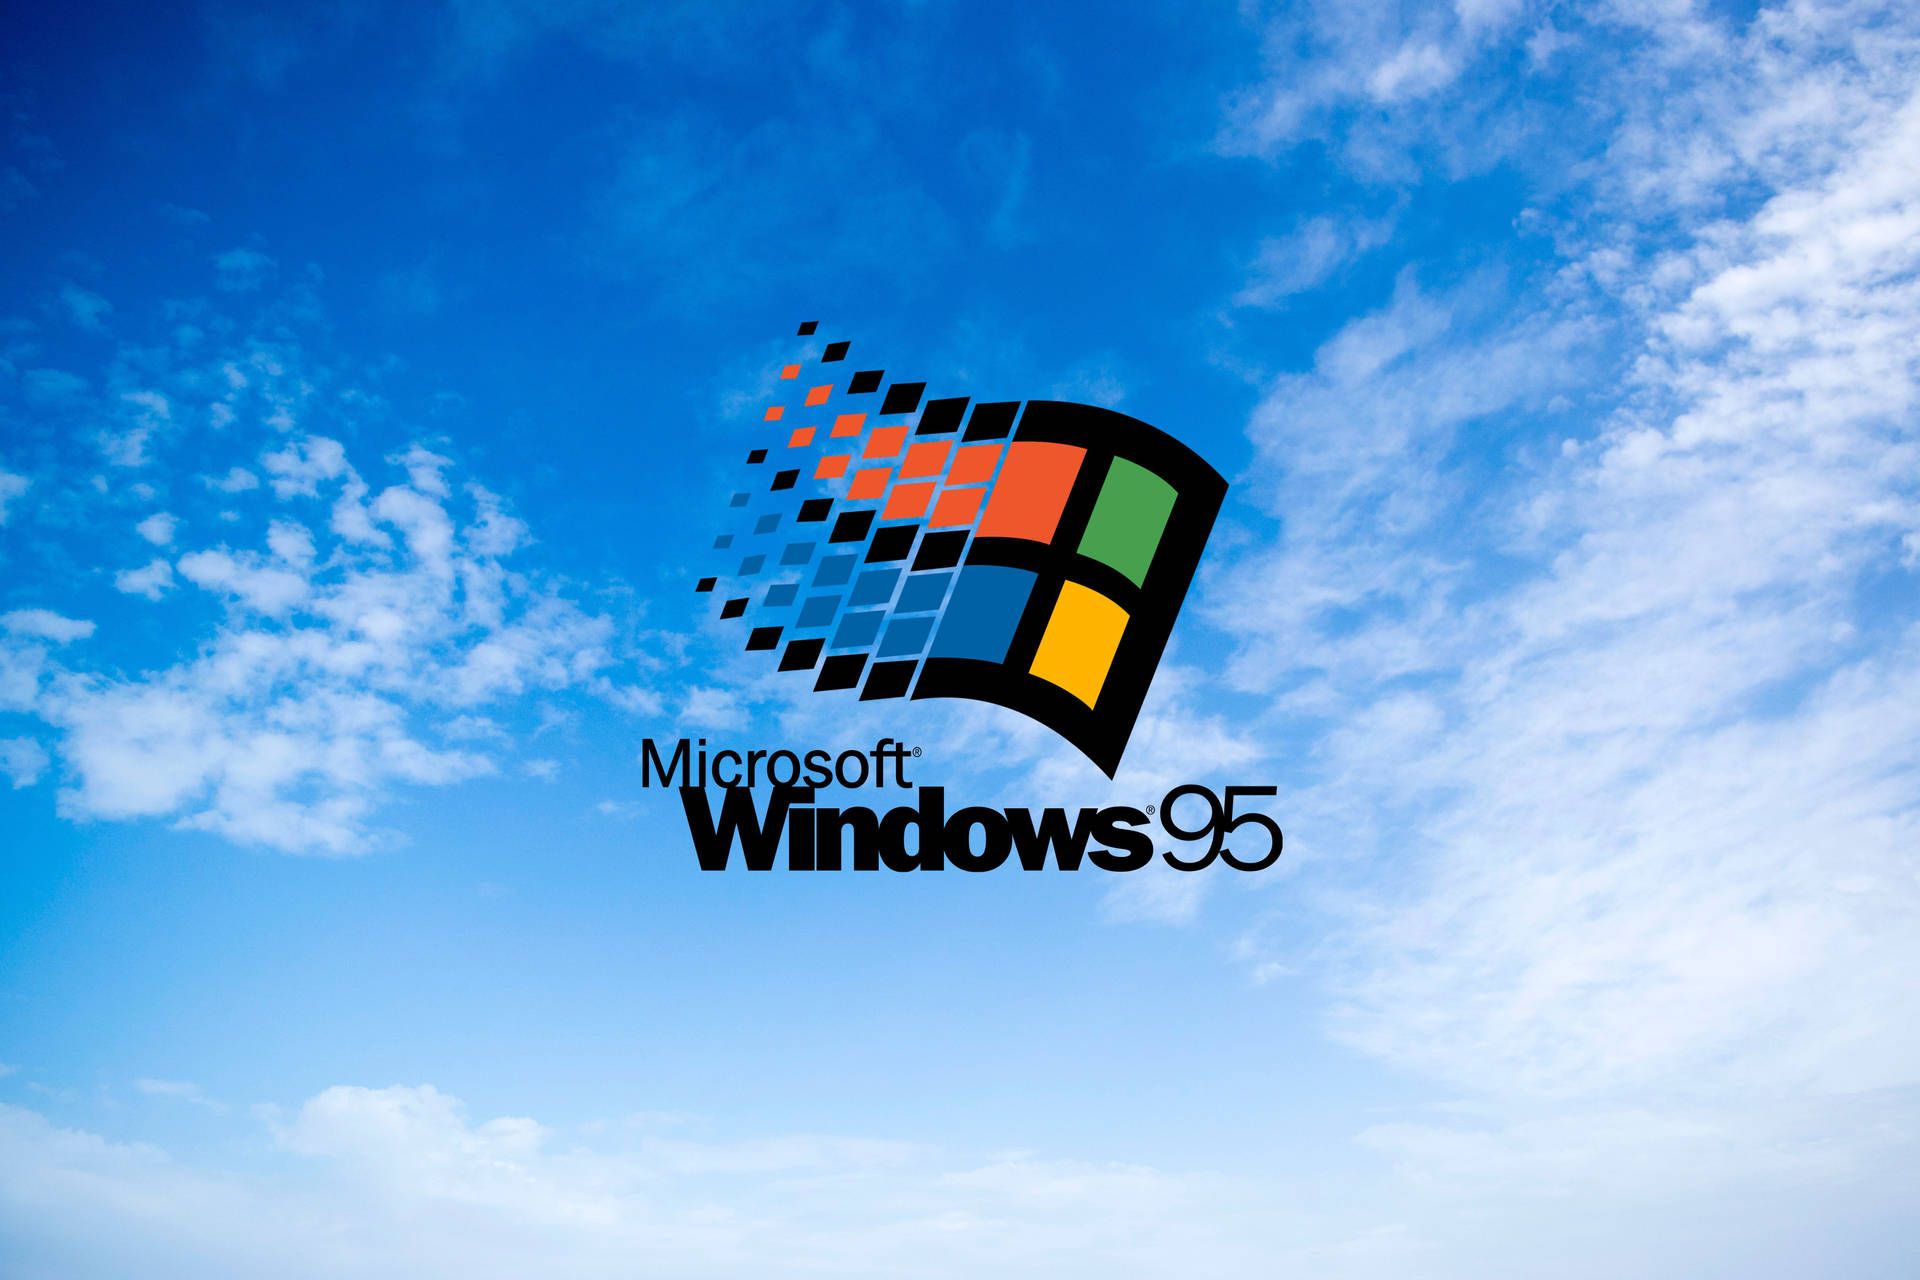 Windows 95 logo on a blue sky background - Windows 95, Windows 98